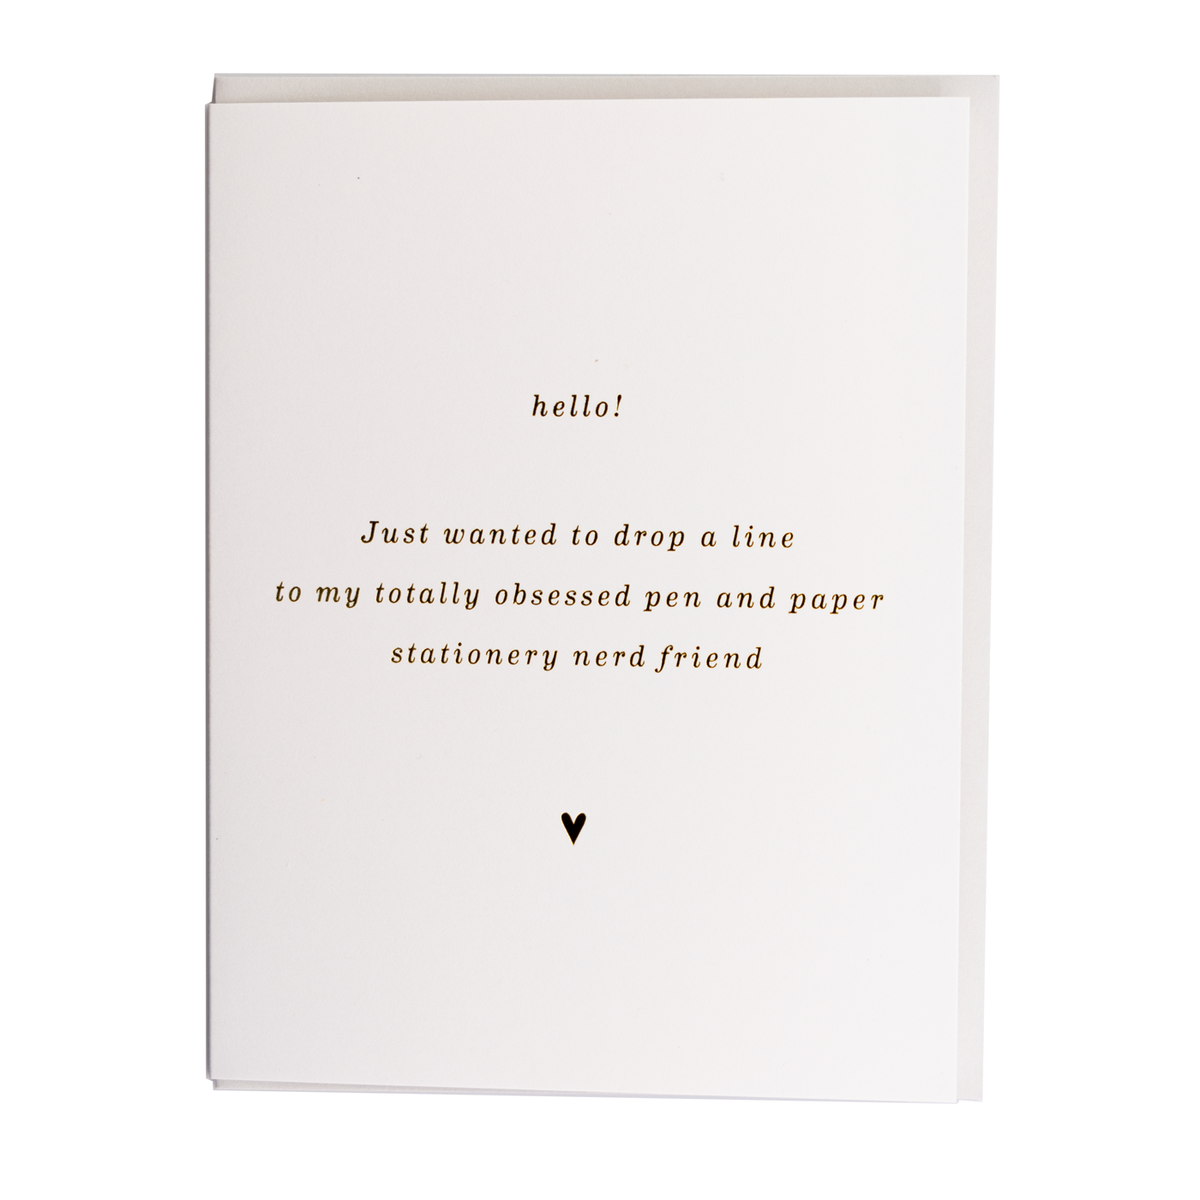 Smitten On Paper - Greeting Card - Nerdy Stationery Friend